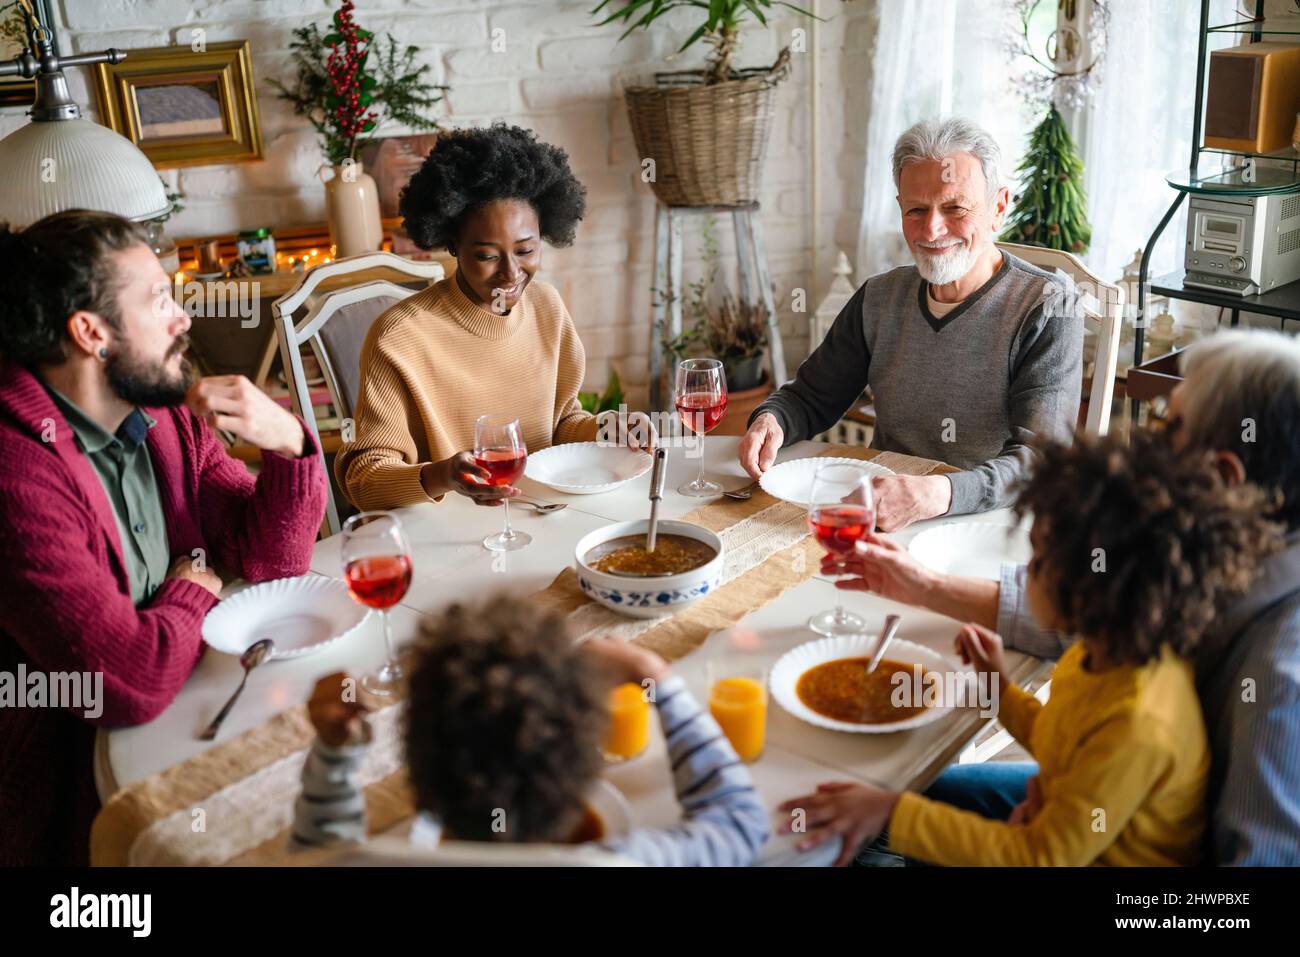 Happy multiethnic multigeneration family having fun together around kitchen table. Stock Photo